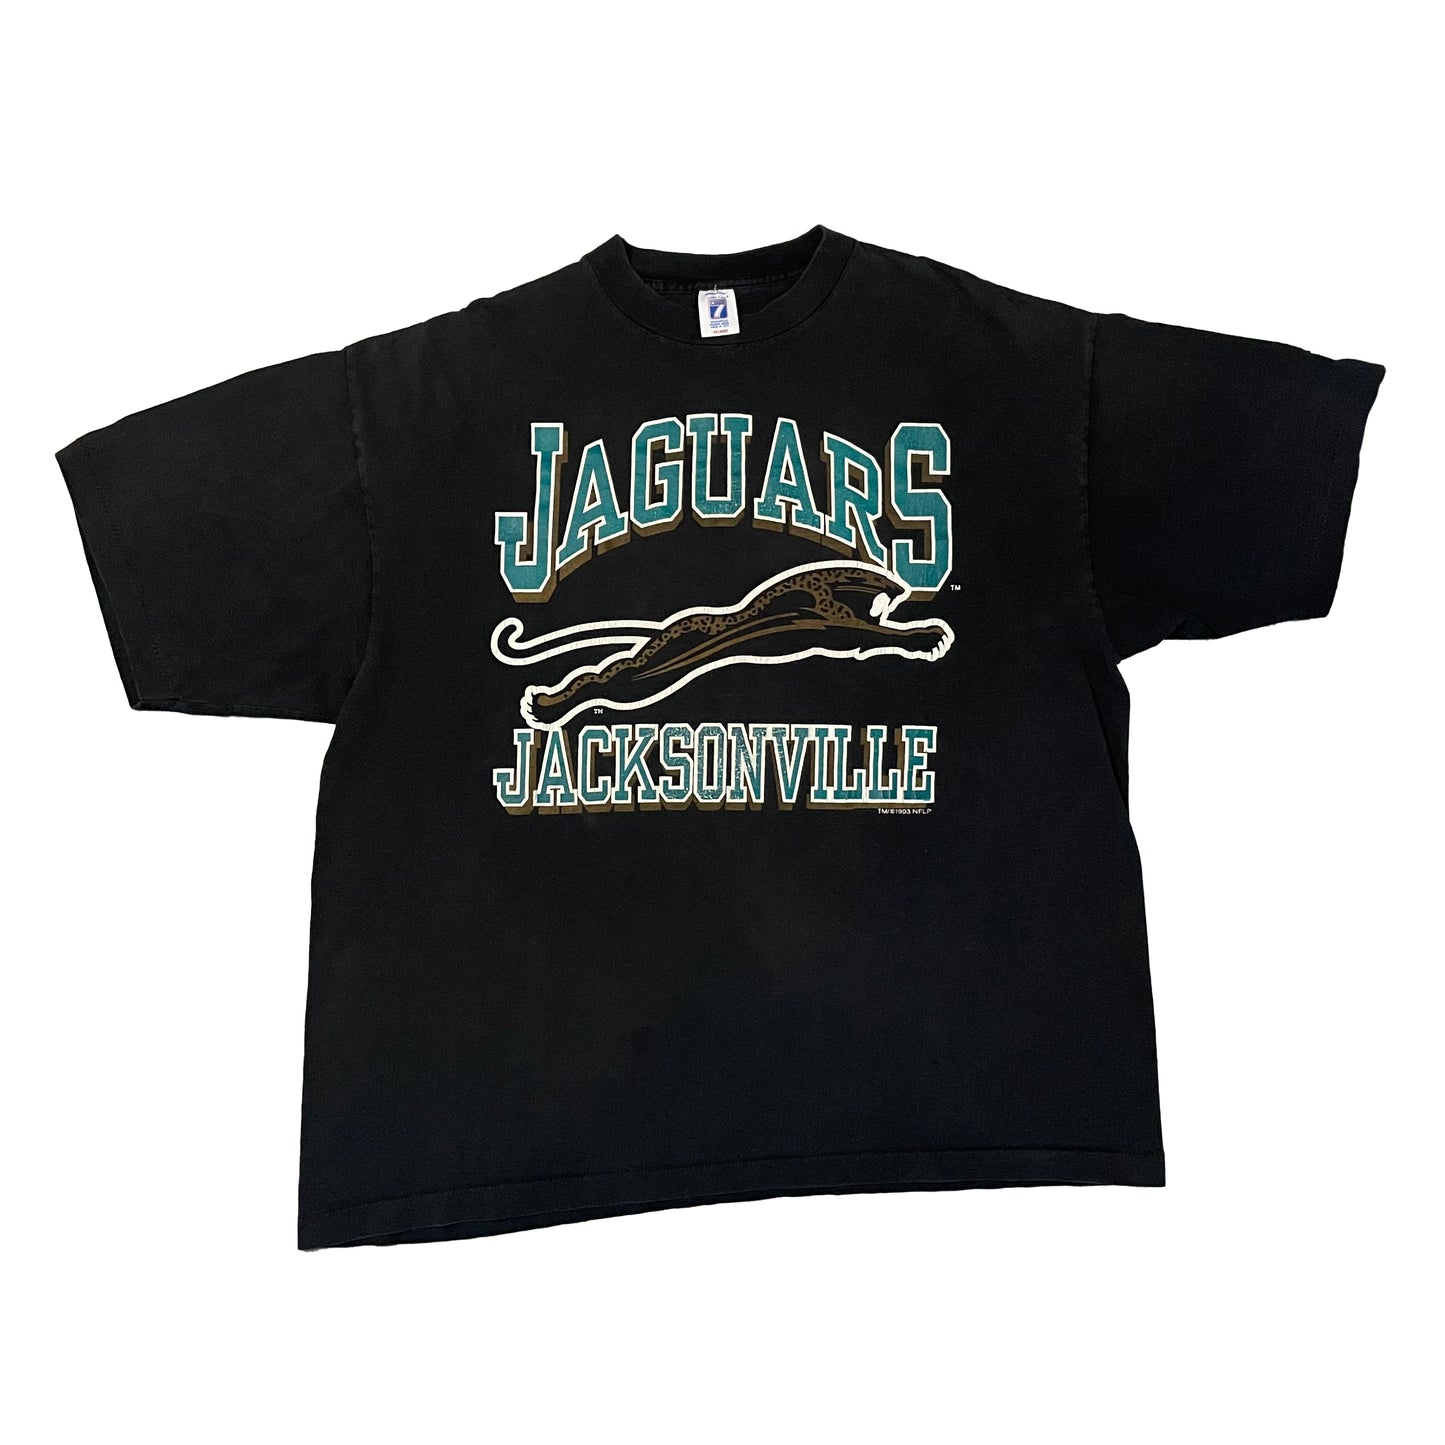 Jacksonville Jaguars banned logo shirt